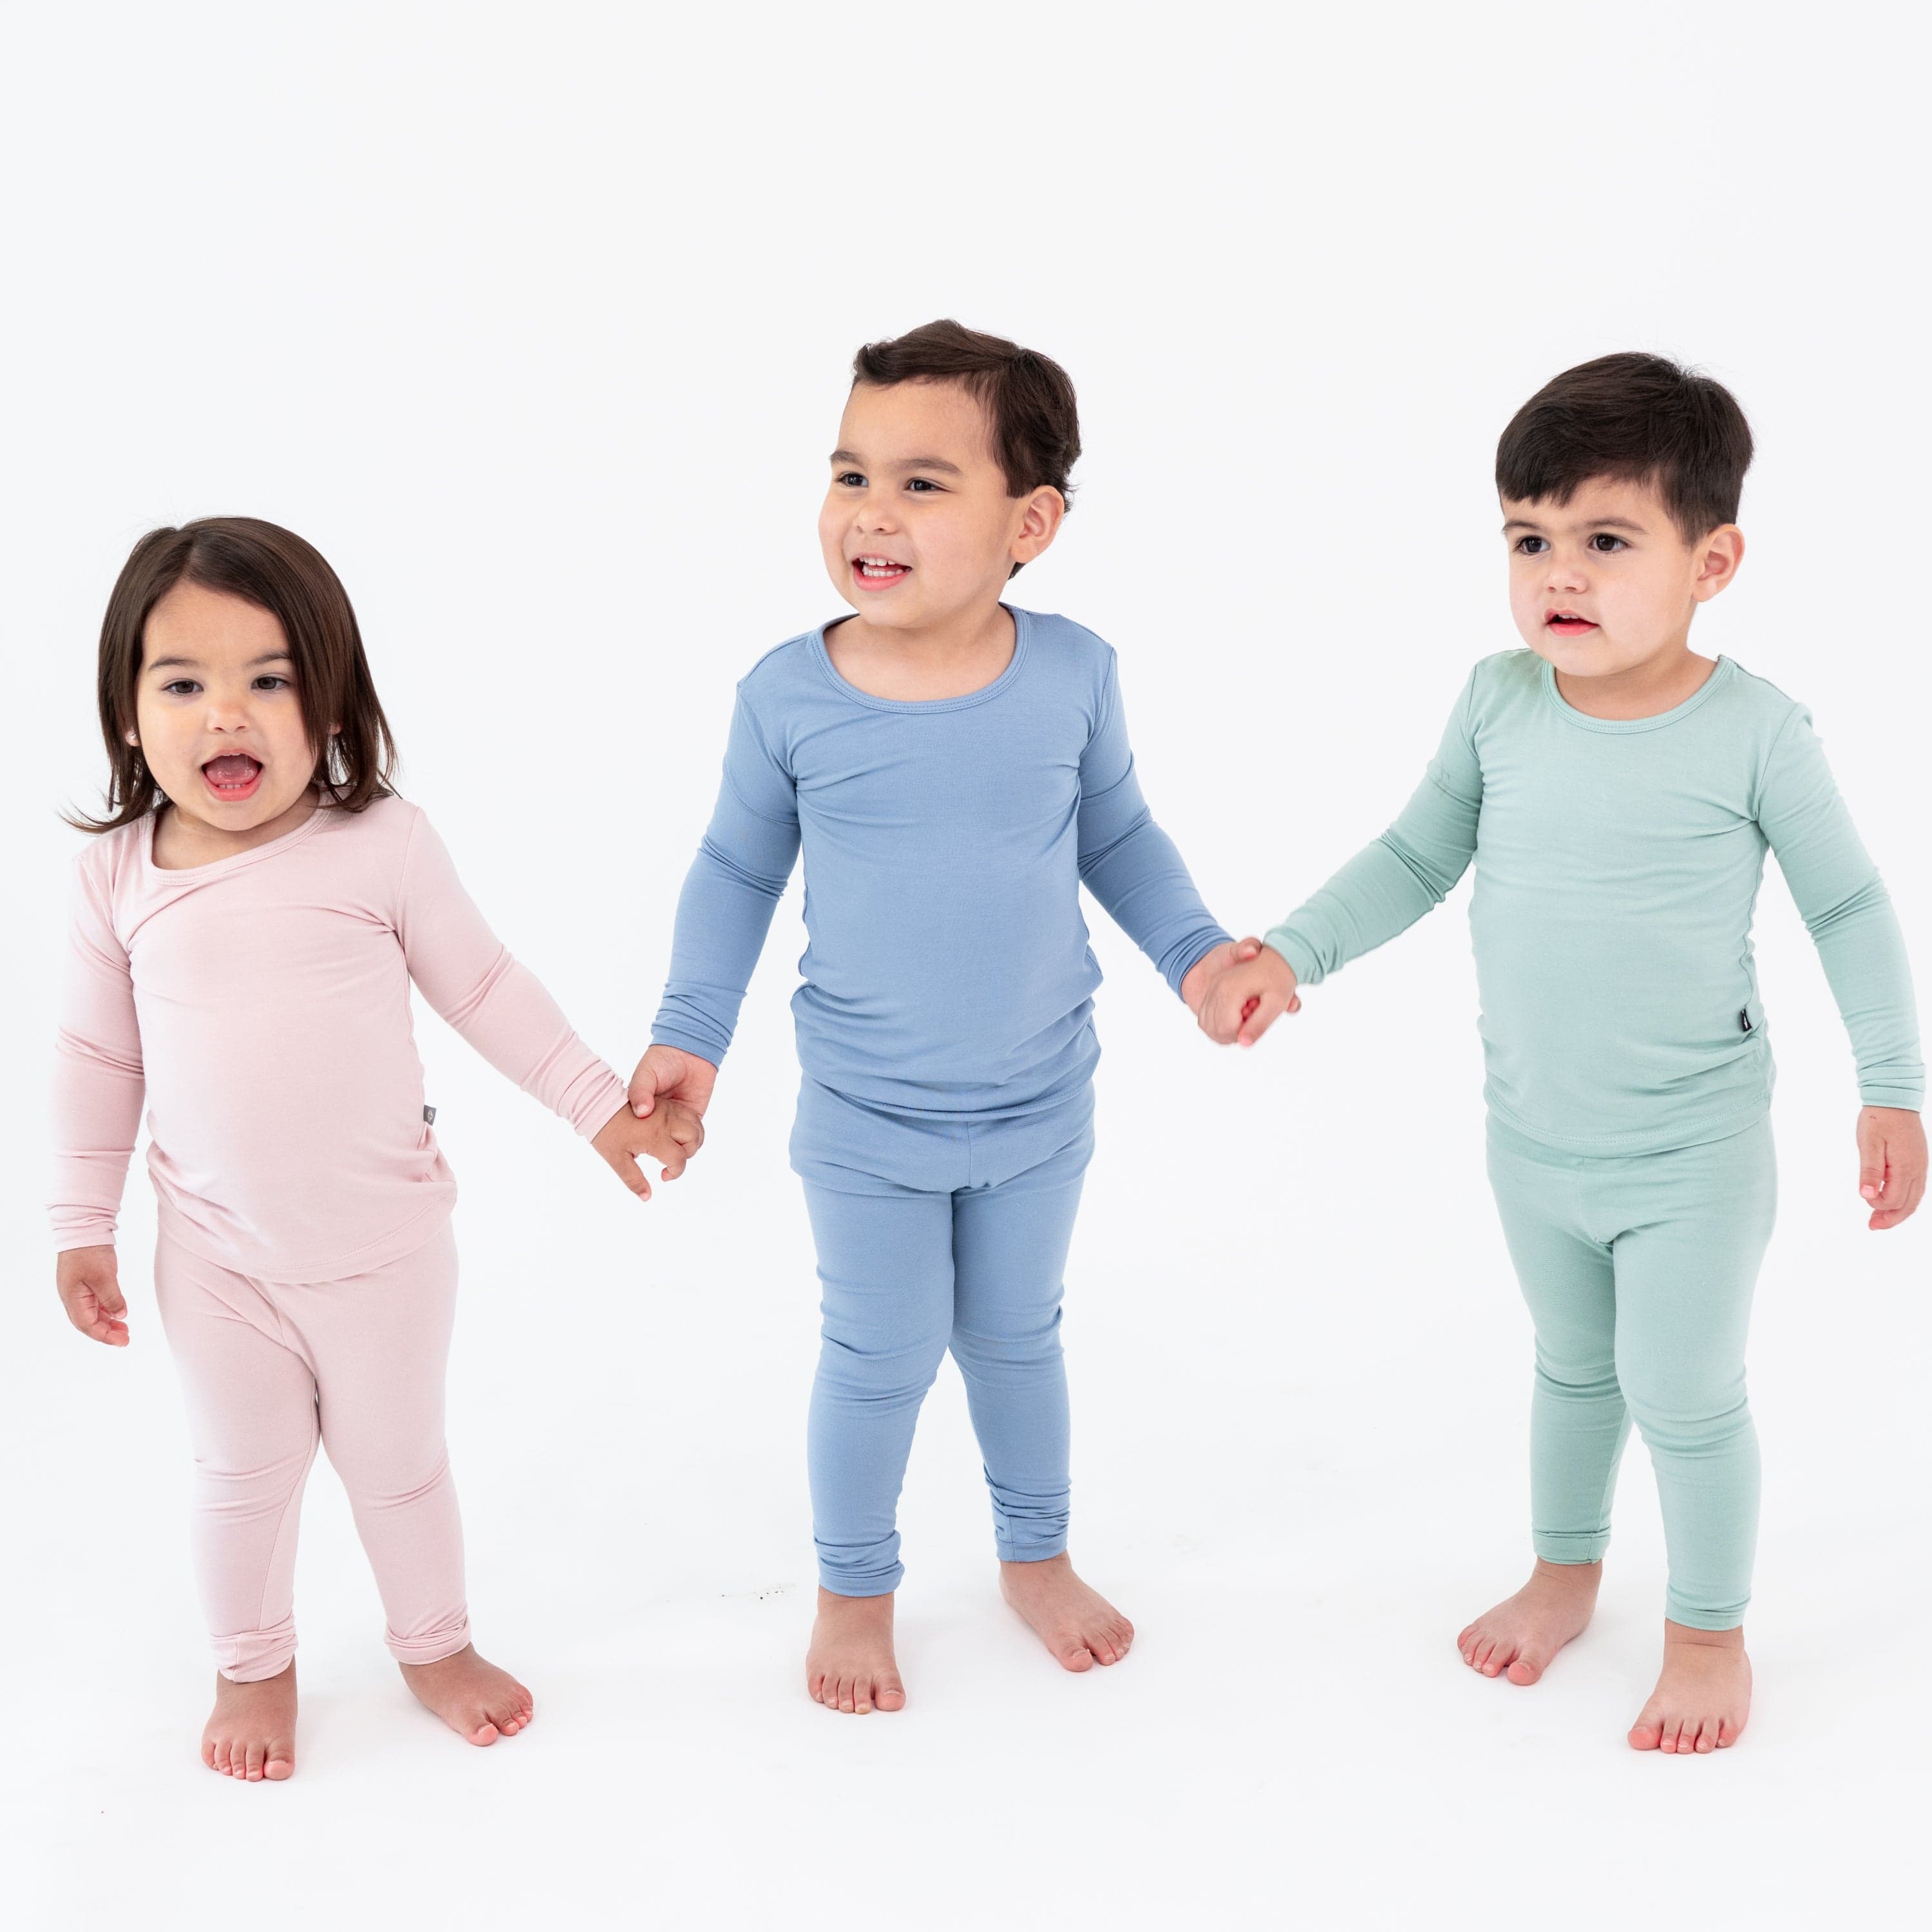 Kids wearing Kyte Baby long sleeve pajamas